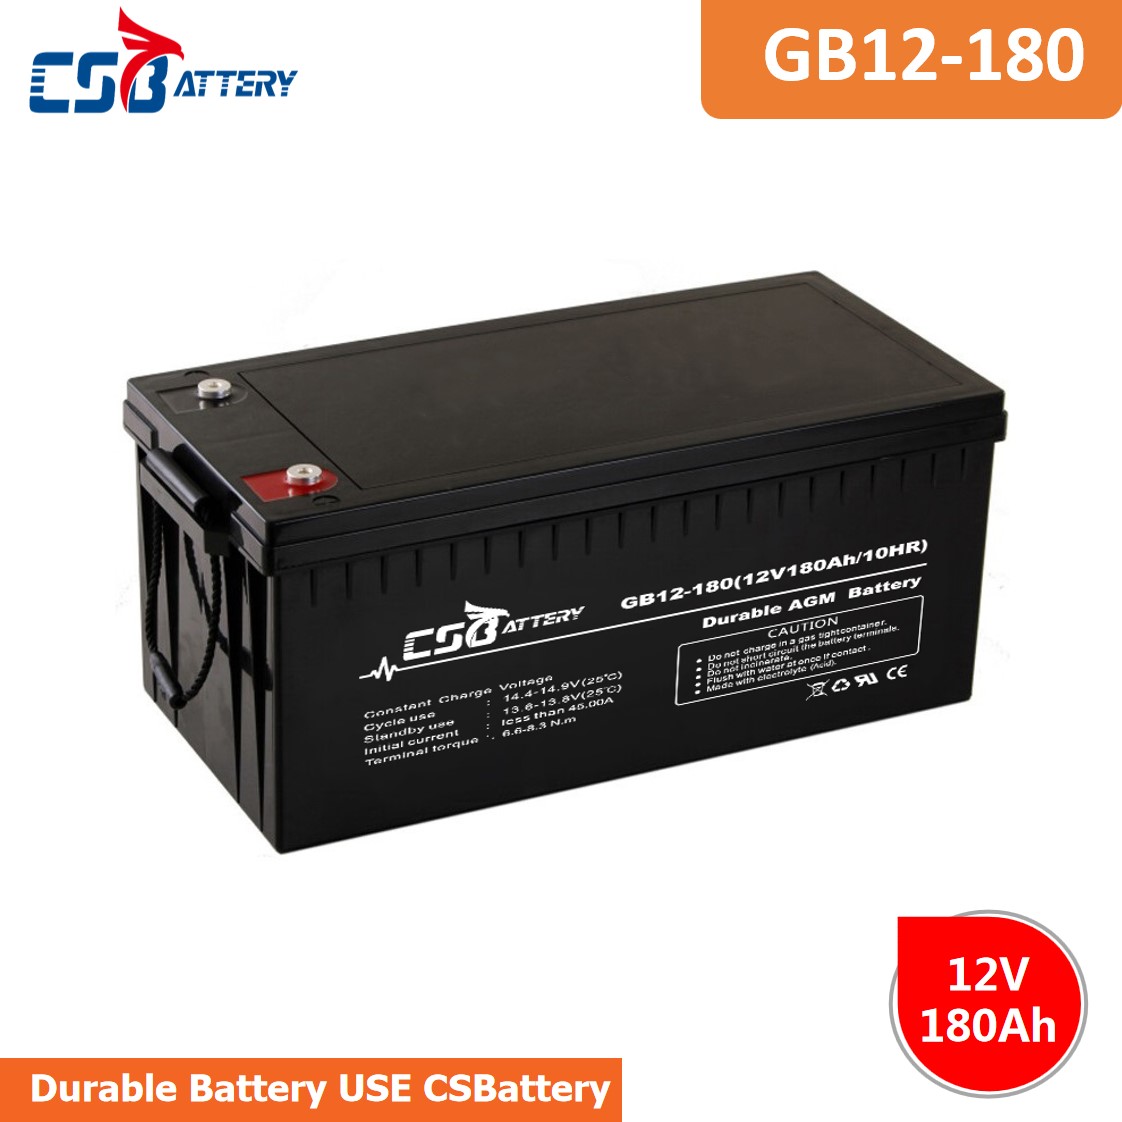 GB12-180 12V 180Ah Lead Acid AGM VRLA Battery